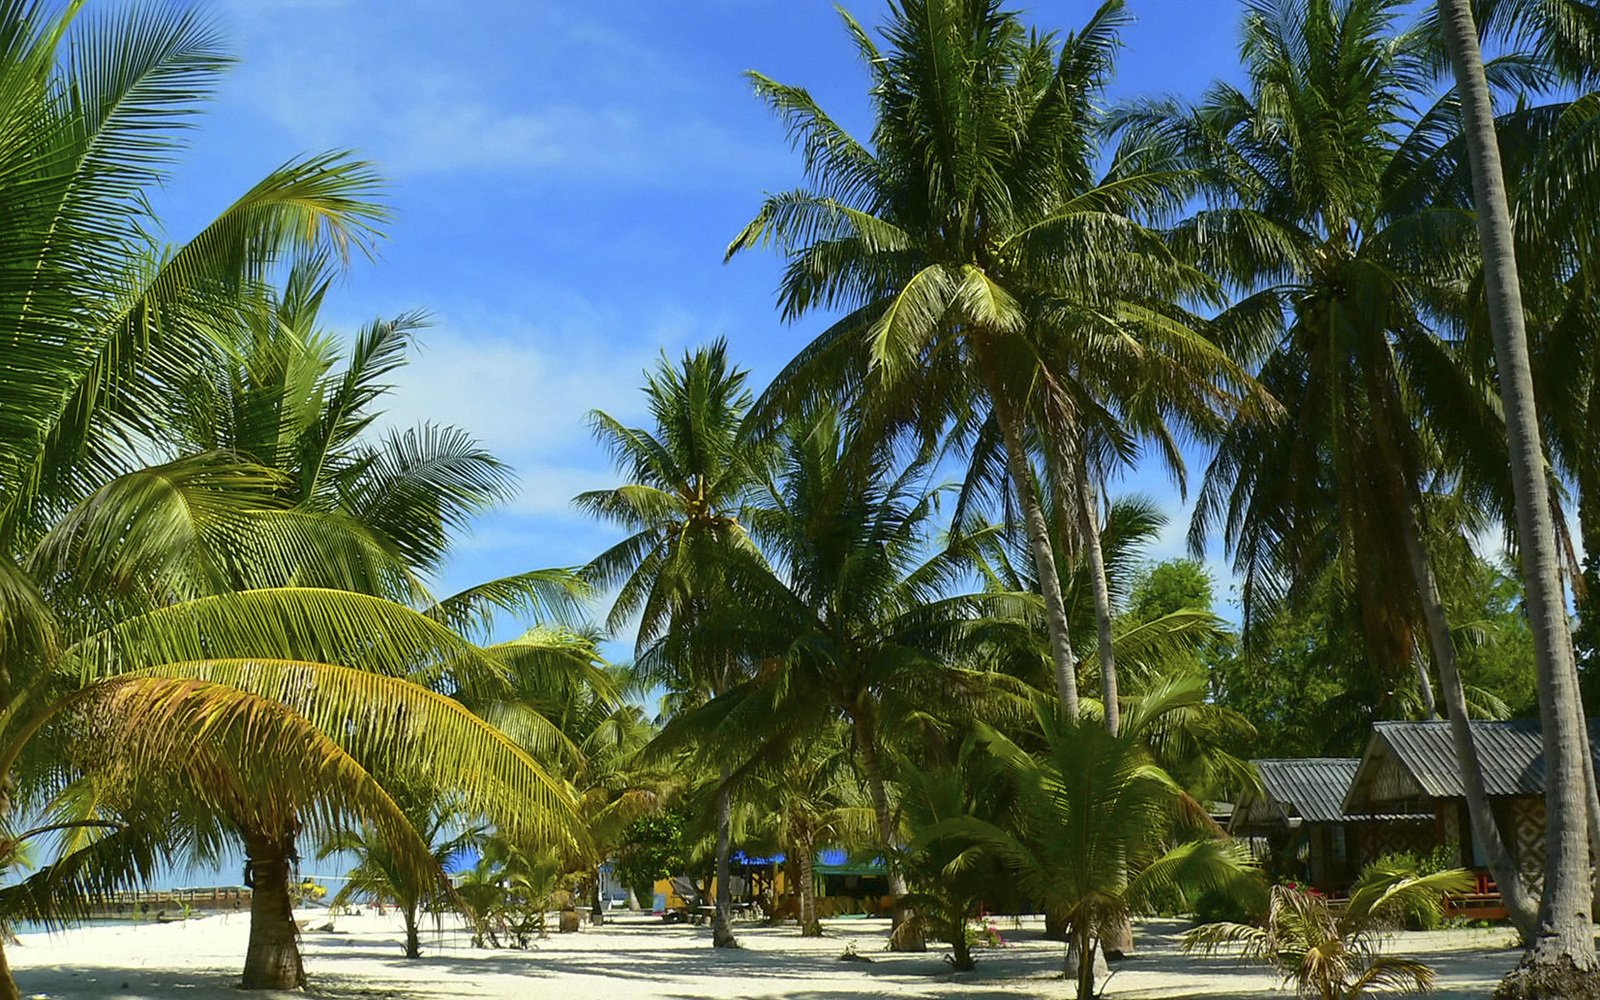 some very pretty palm trees on the beach